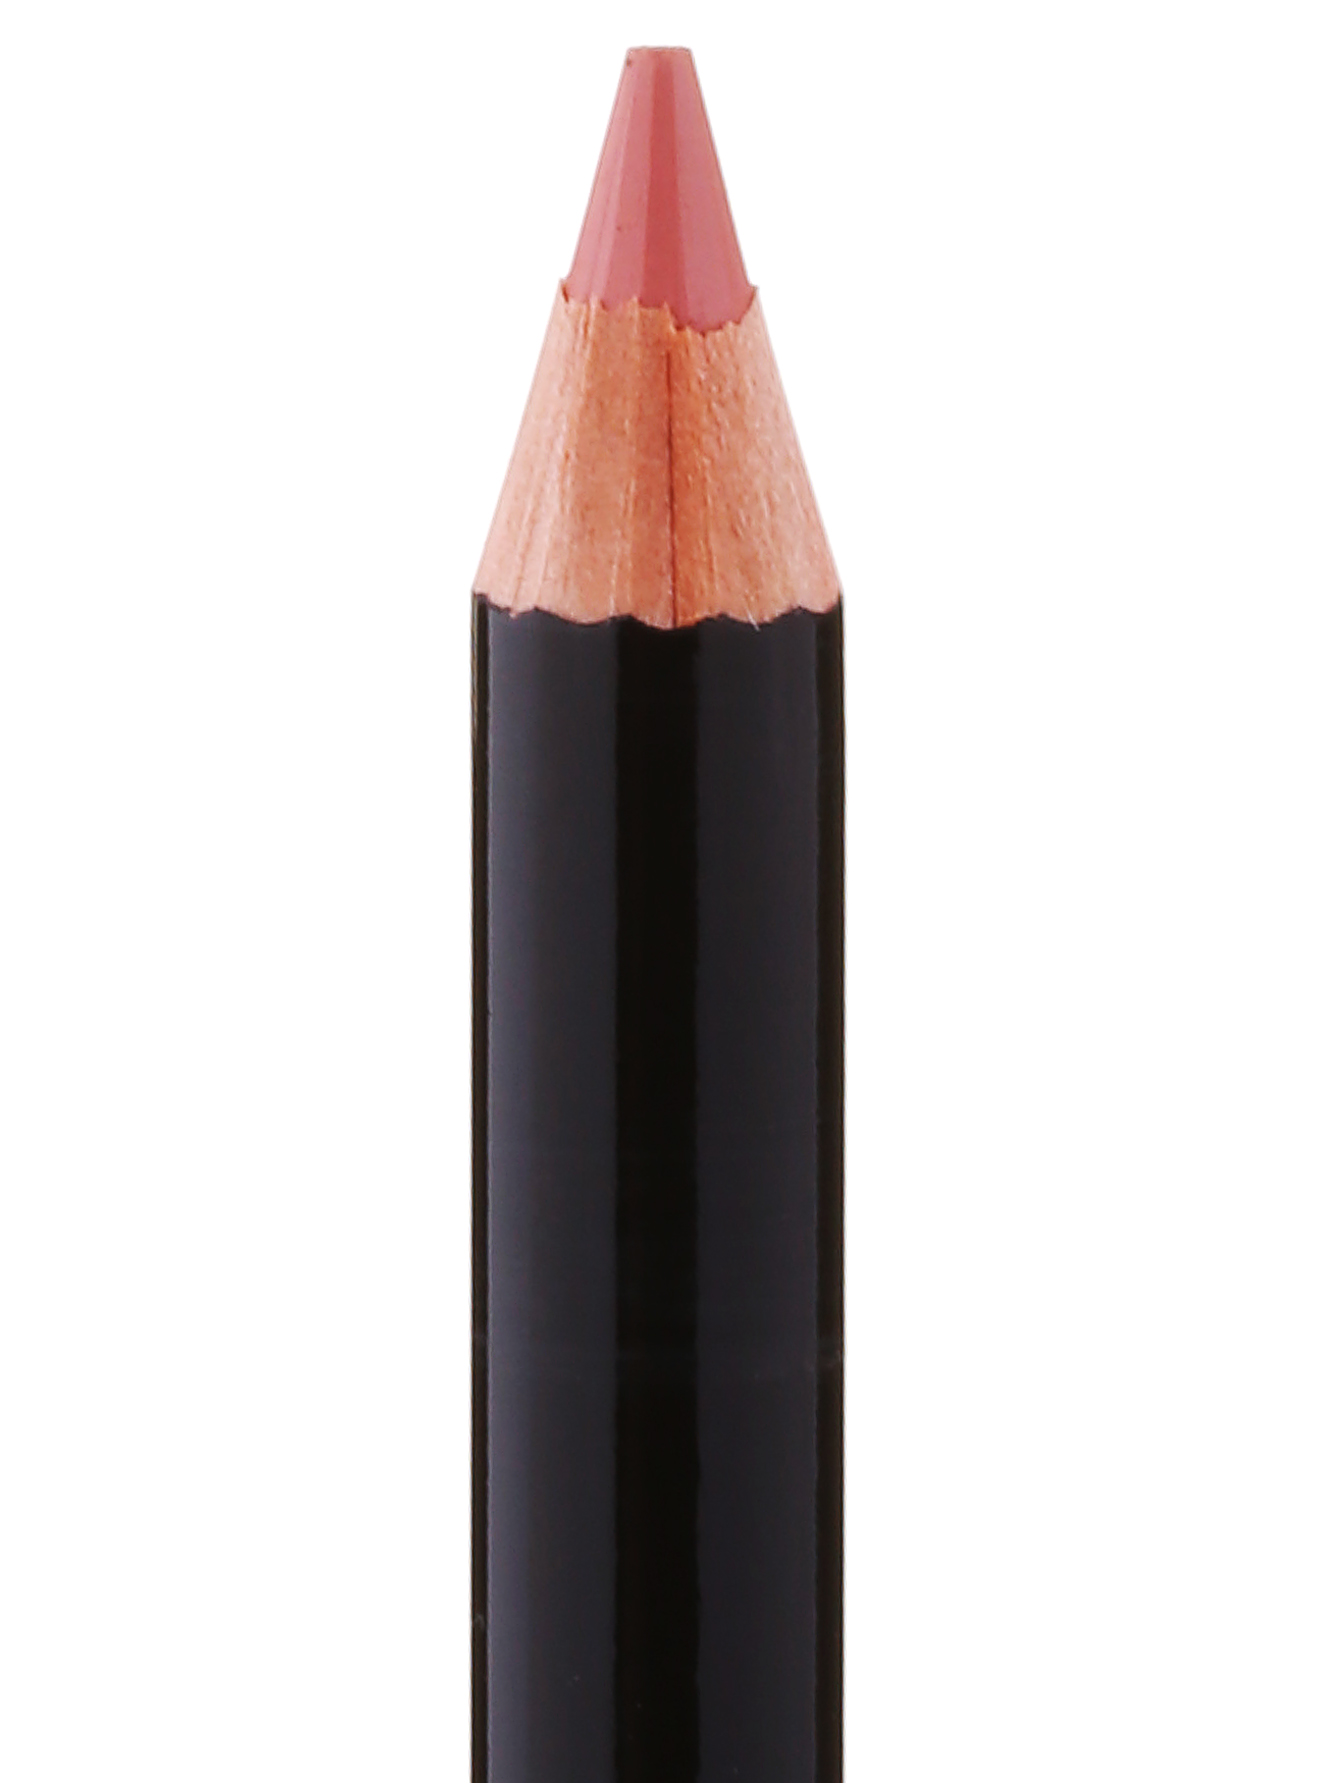  Карандаш для контура губ - Pale Pink, Lip Liner - Общий вид